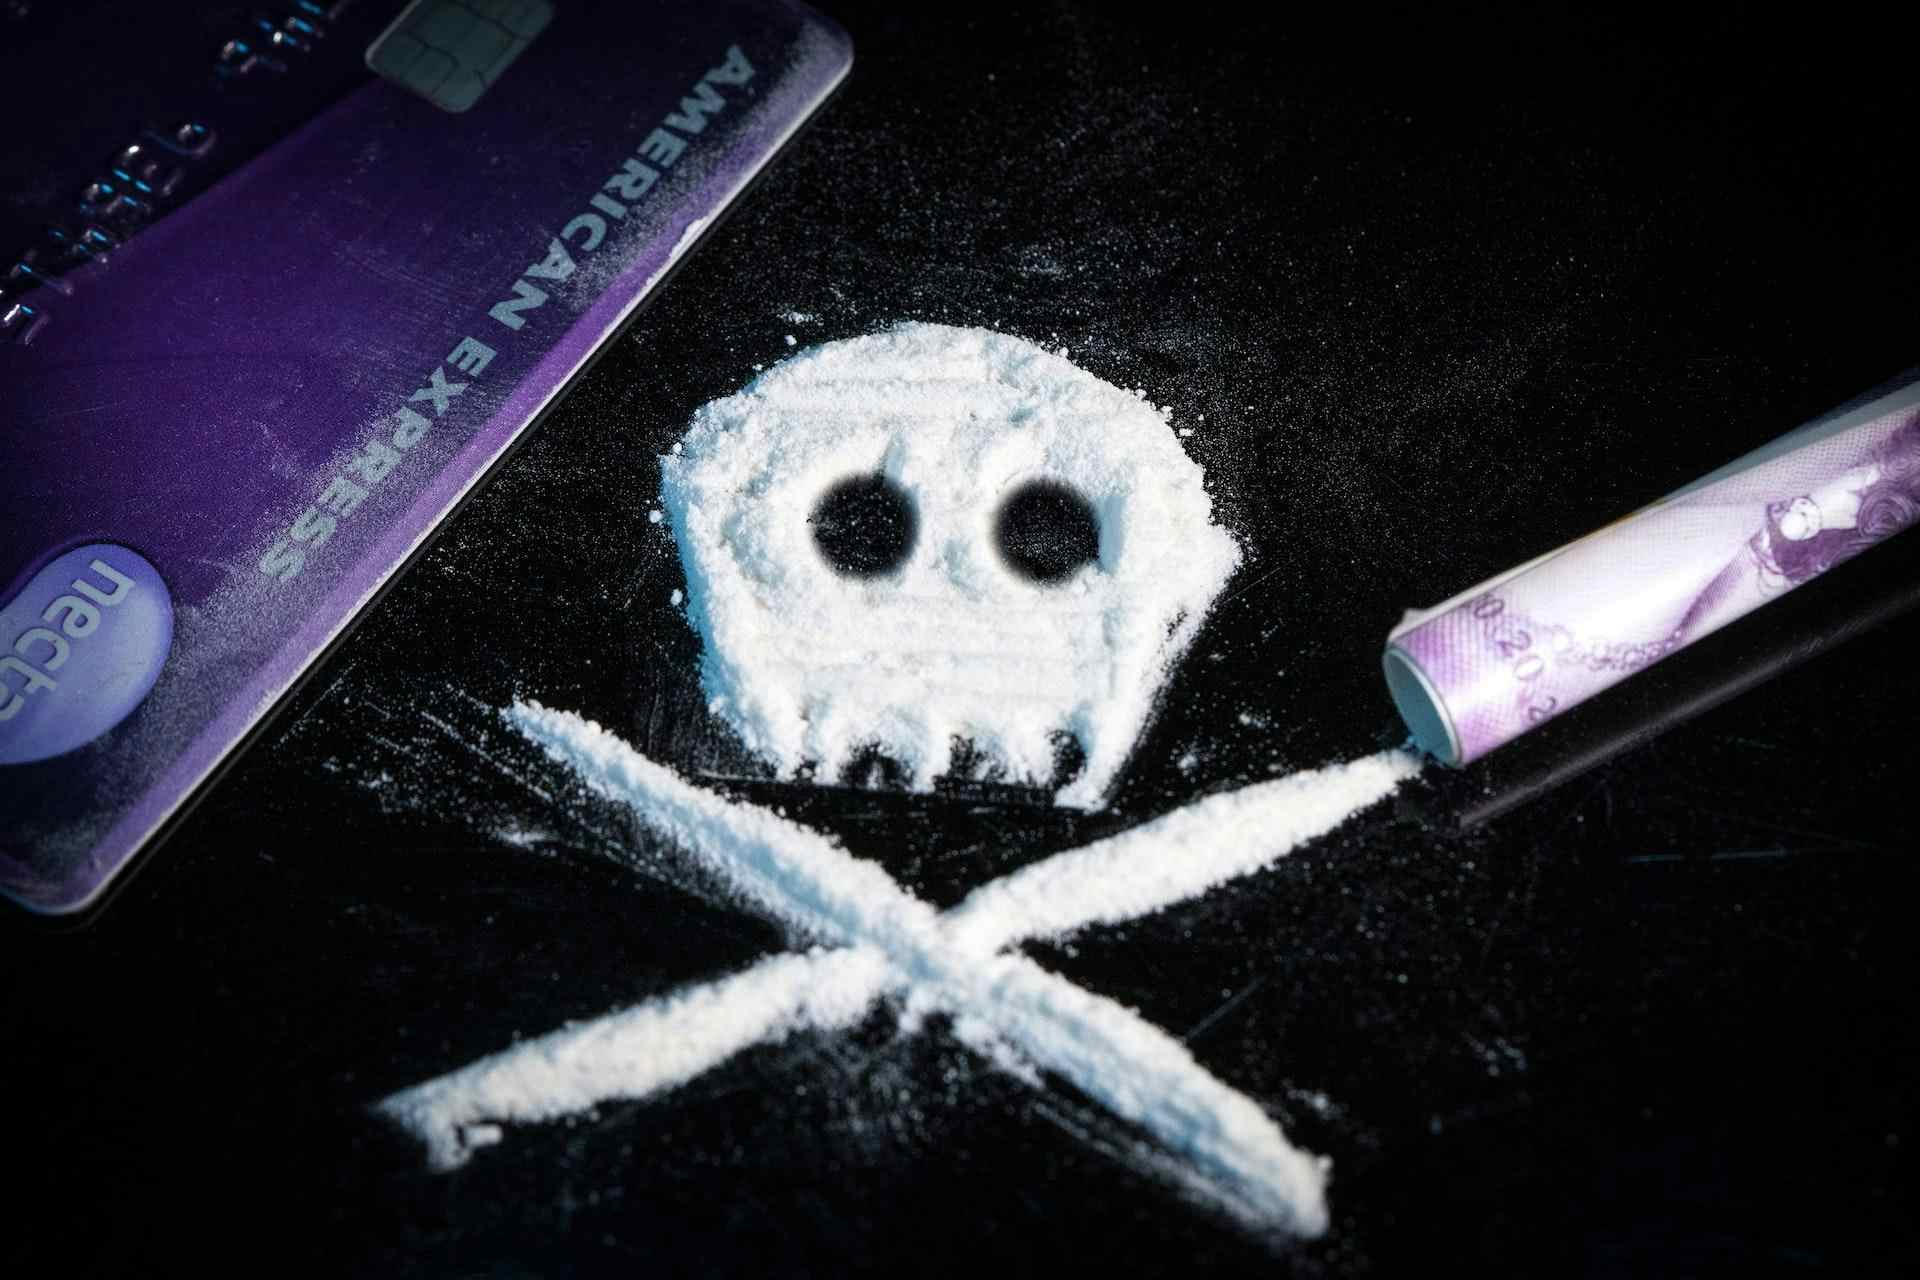 How to beat cocaine addiction